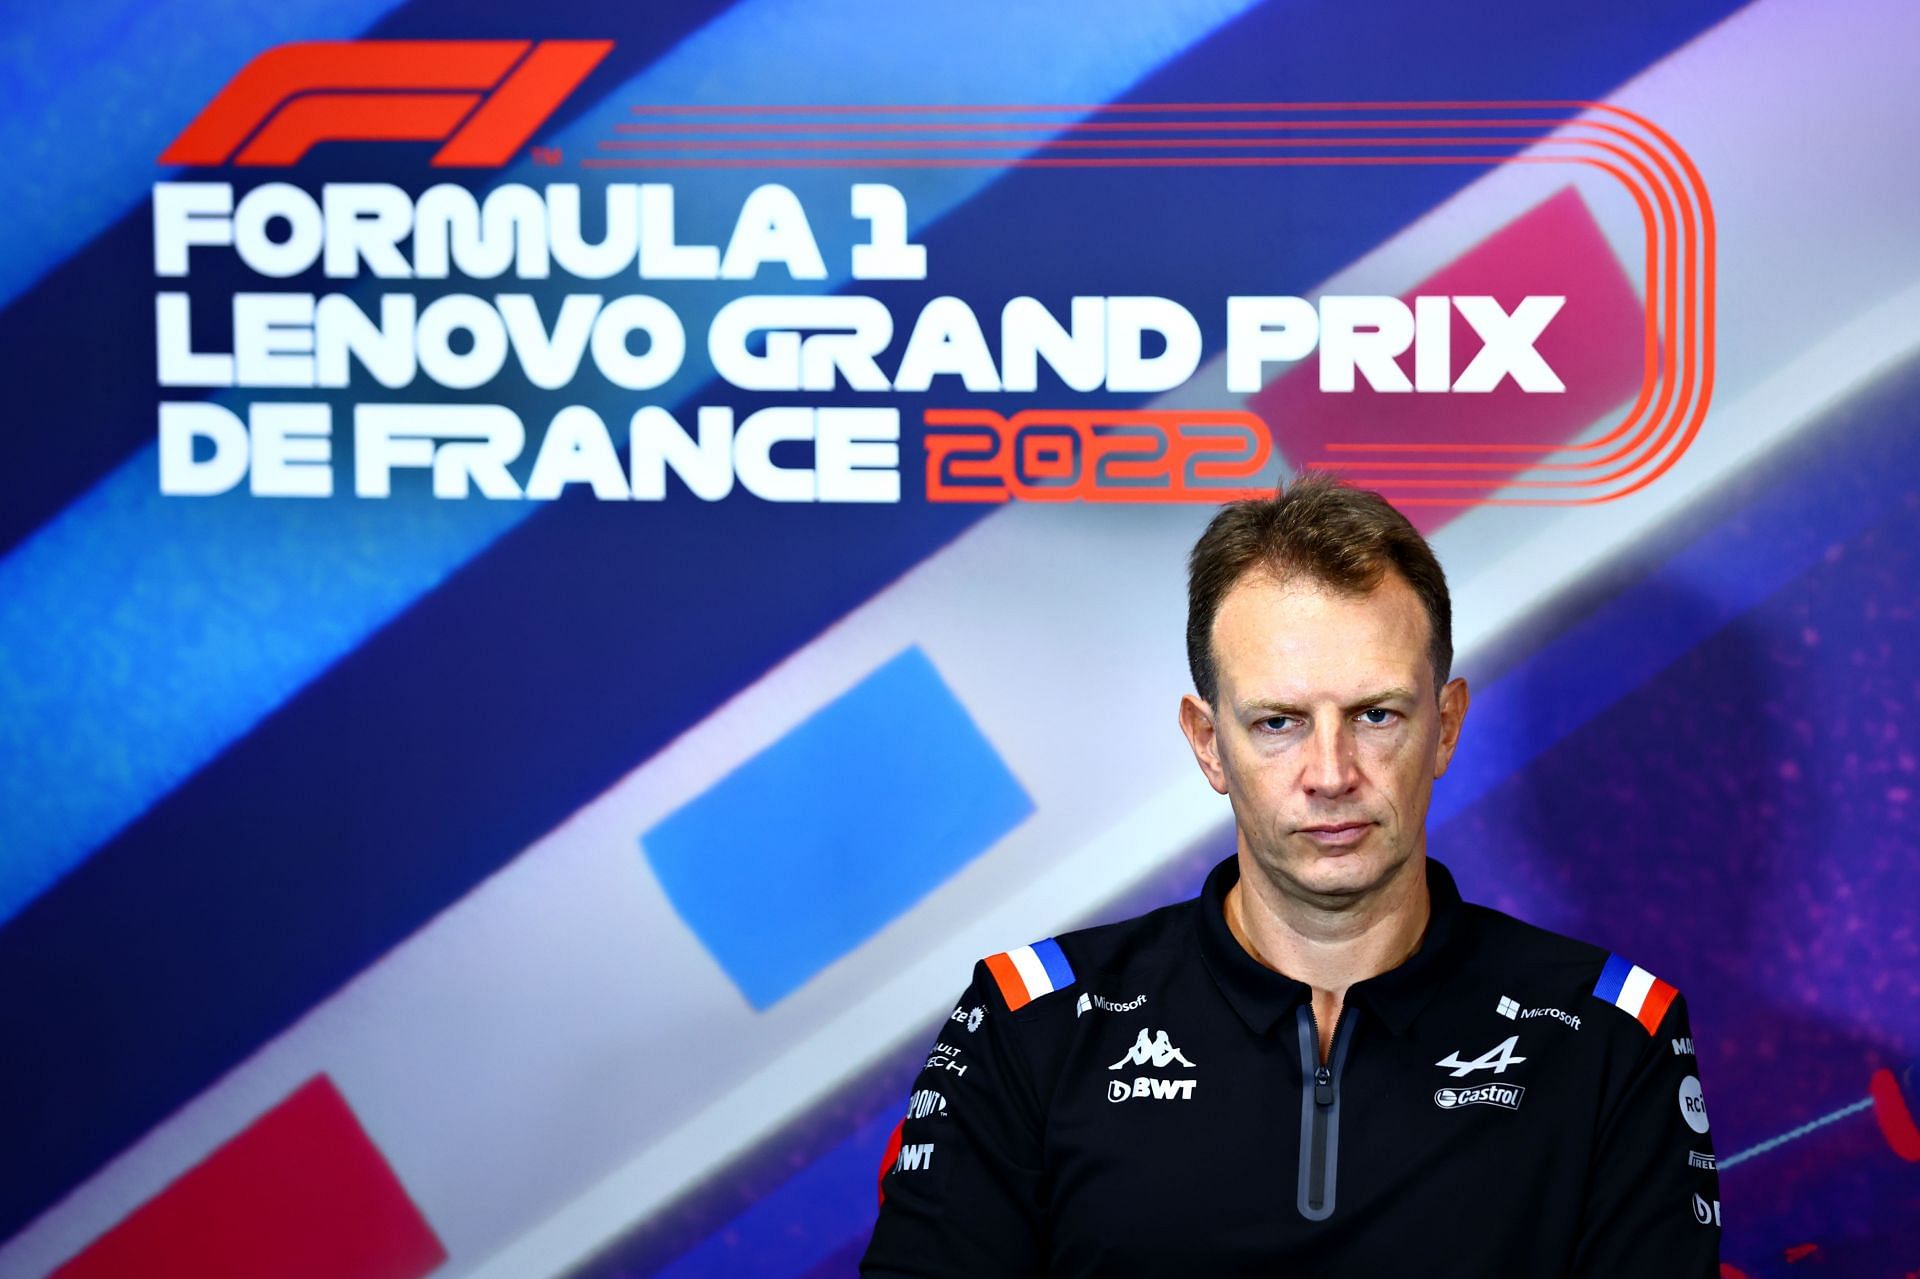 F1 Grand Prix of France - Final Practice